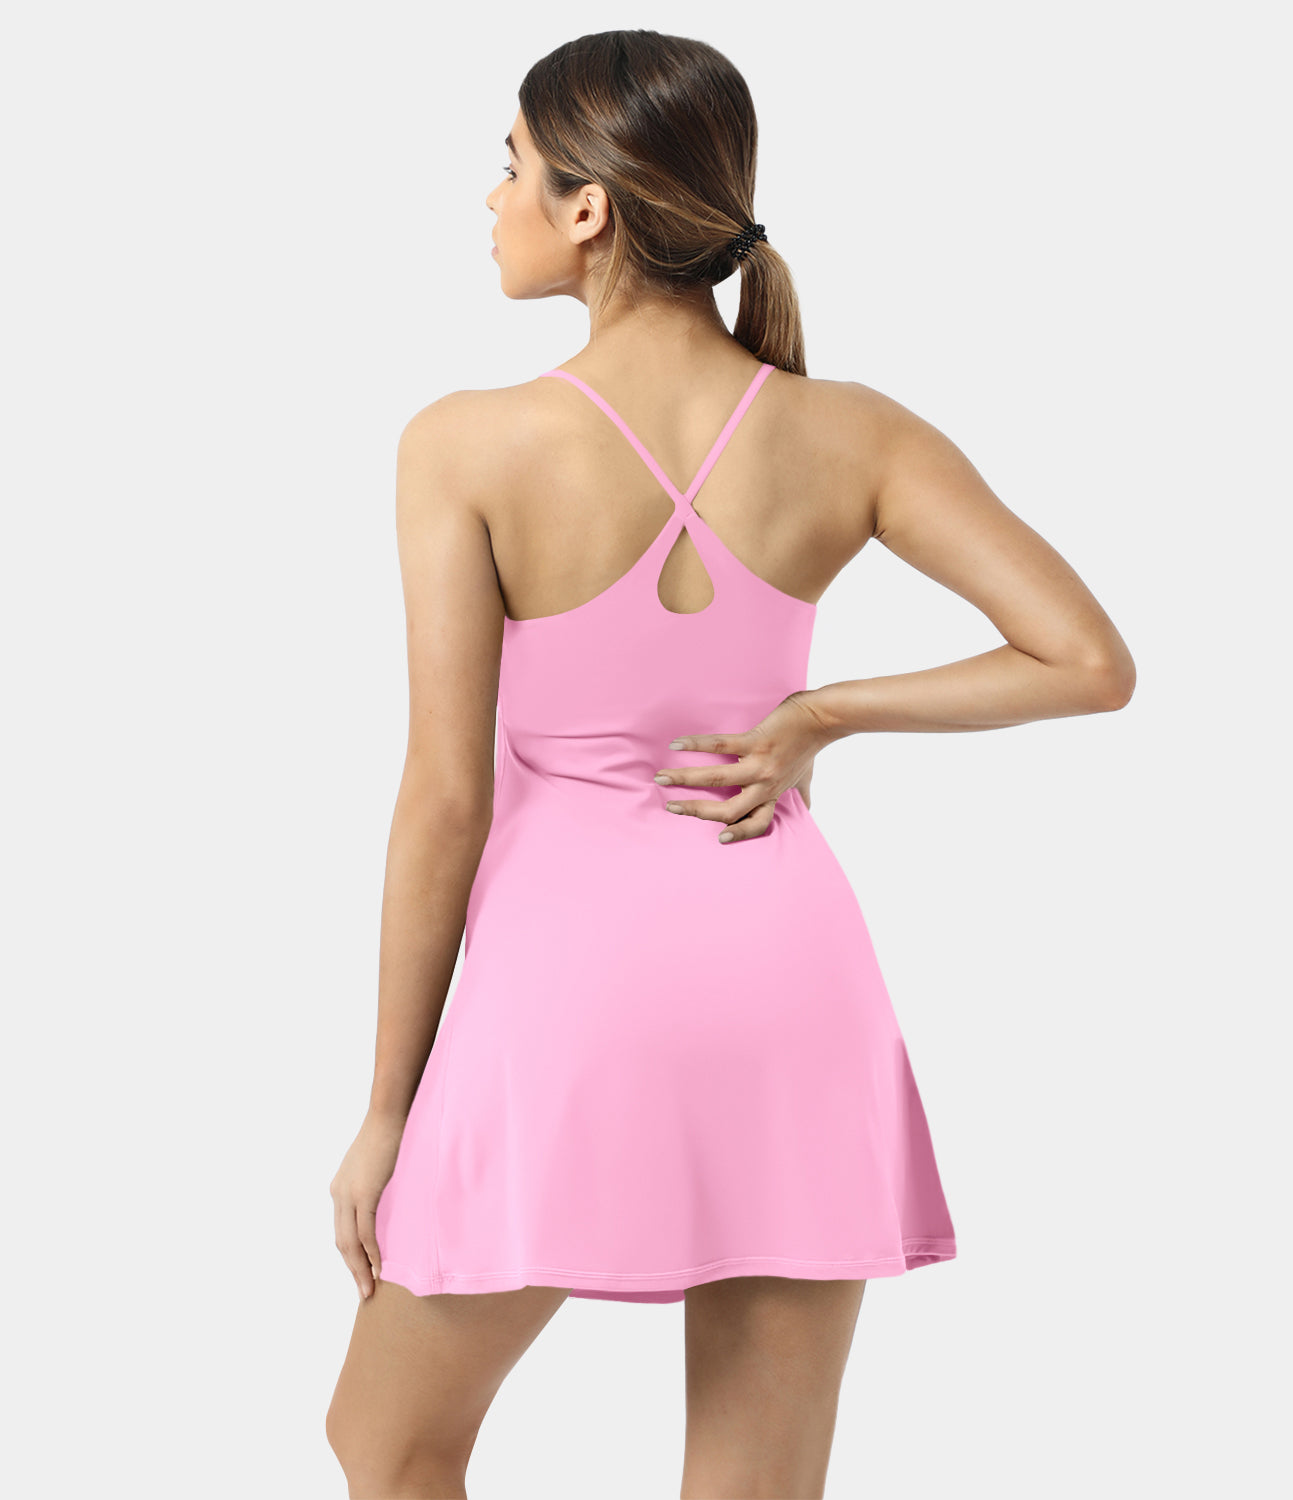 

Halara Everyday Cloudfulв„ў Backless 2-in-1 Flare Workout Dress-Wannabe Workout Dress - Lemon Zest